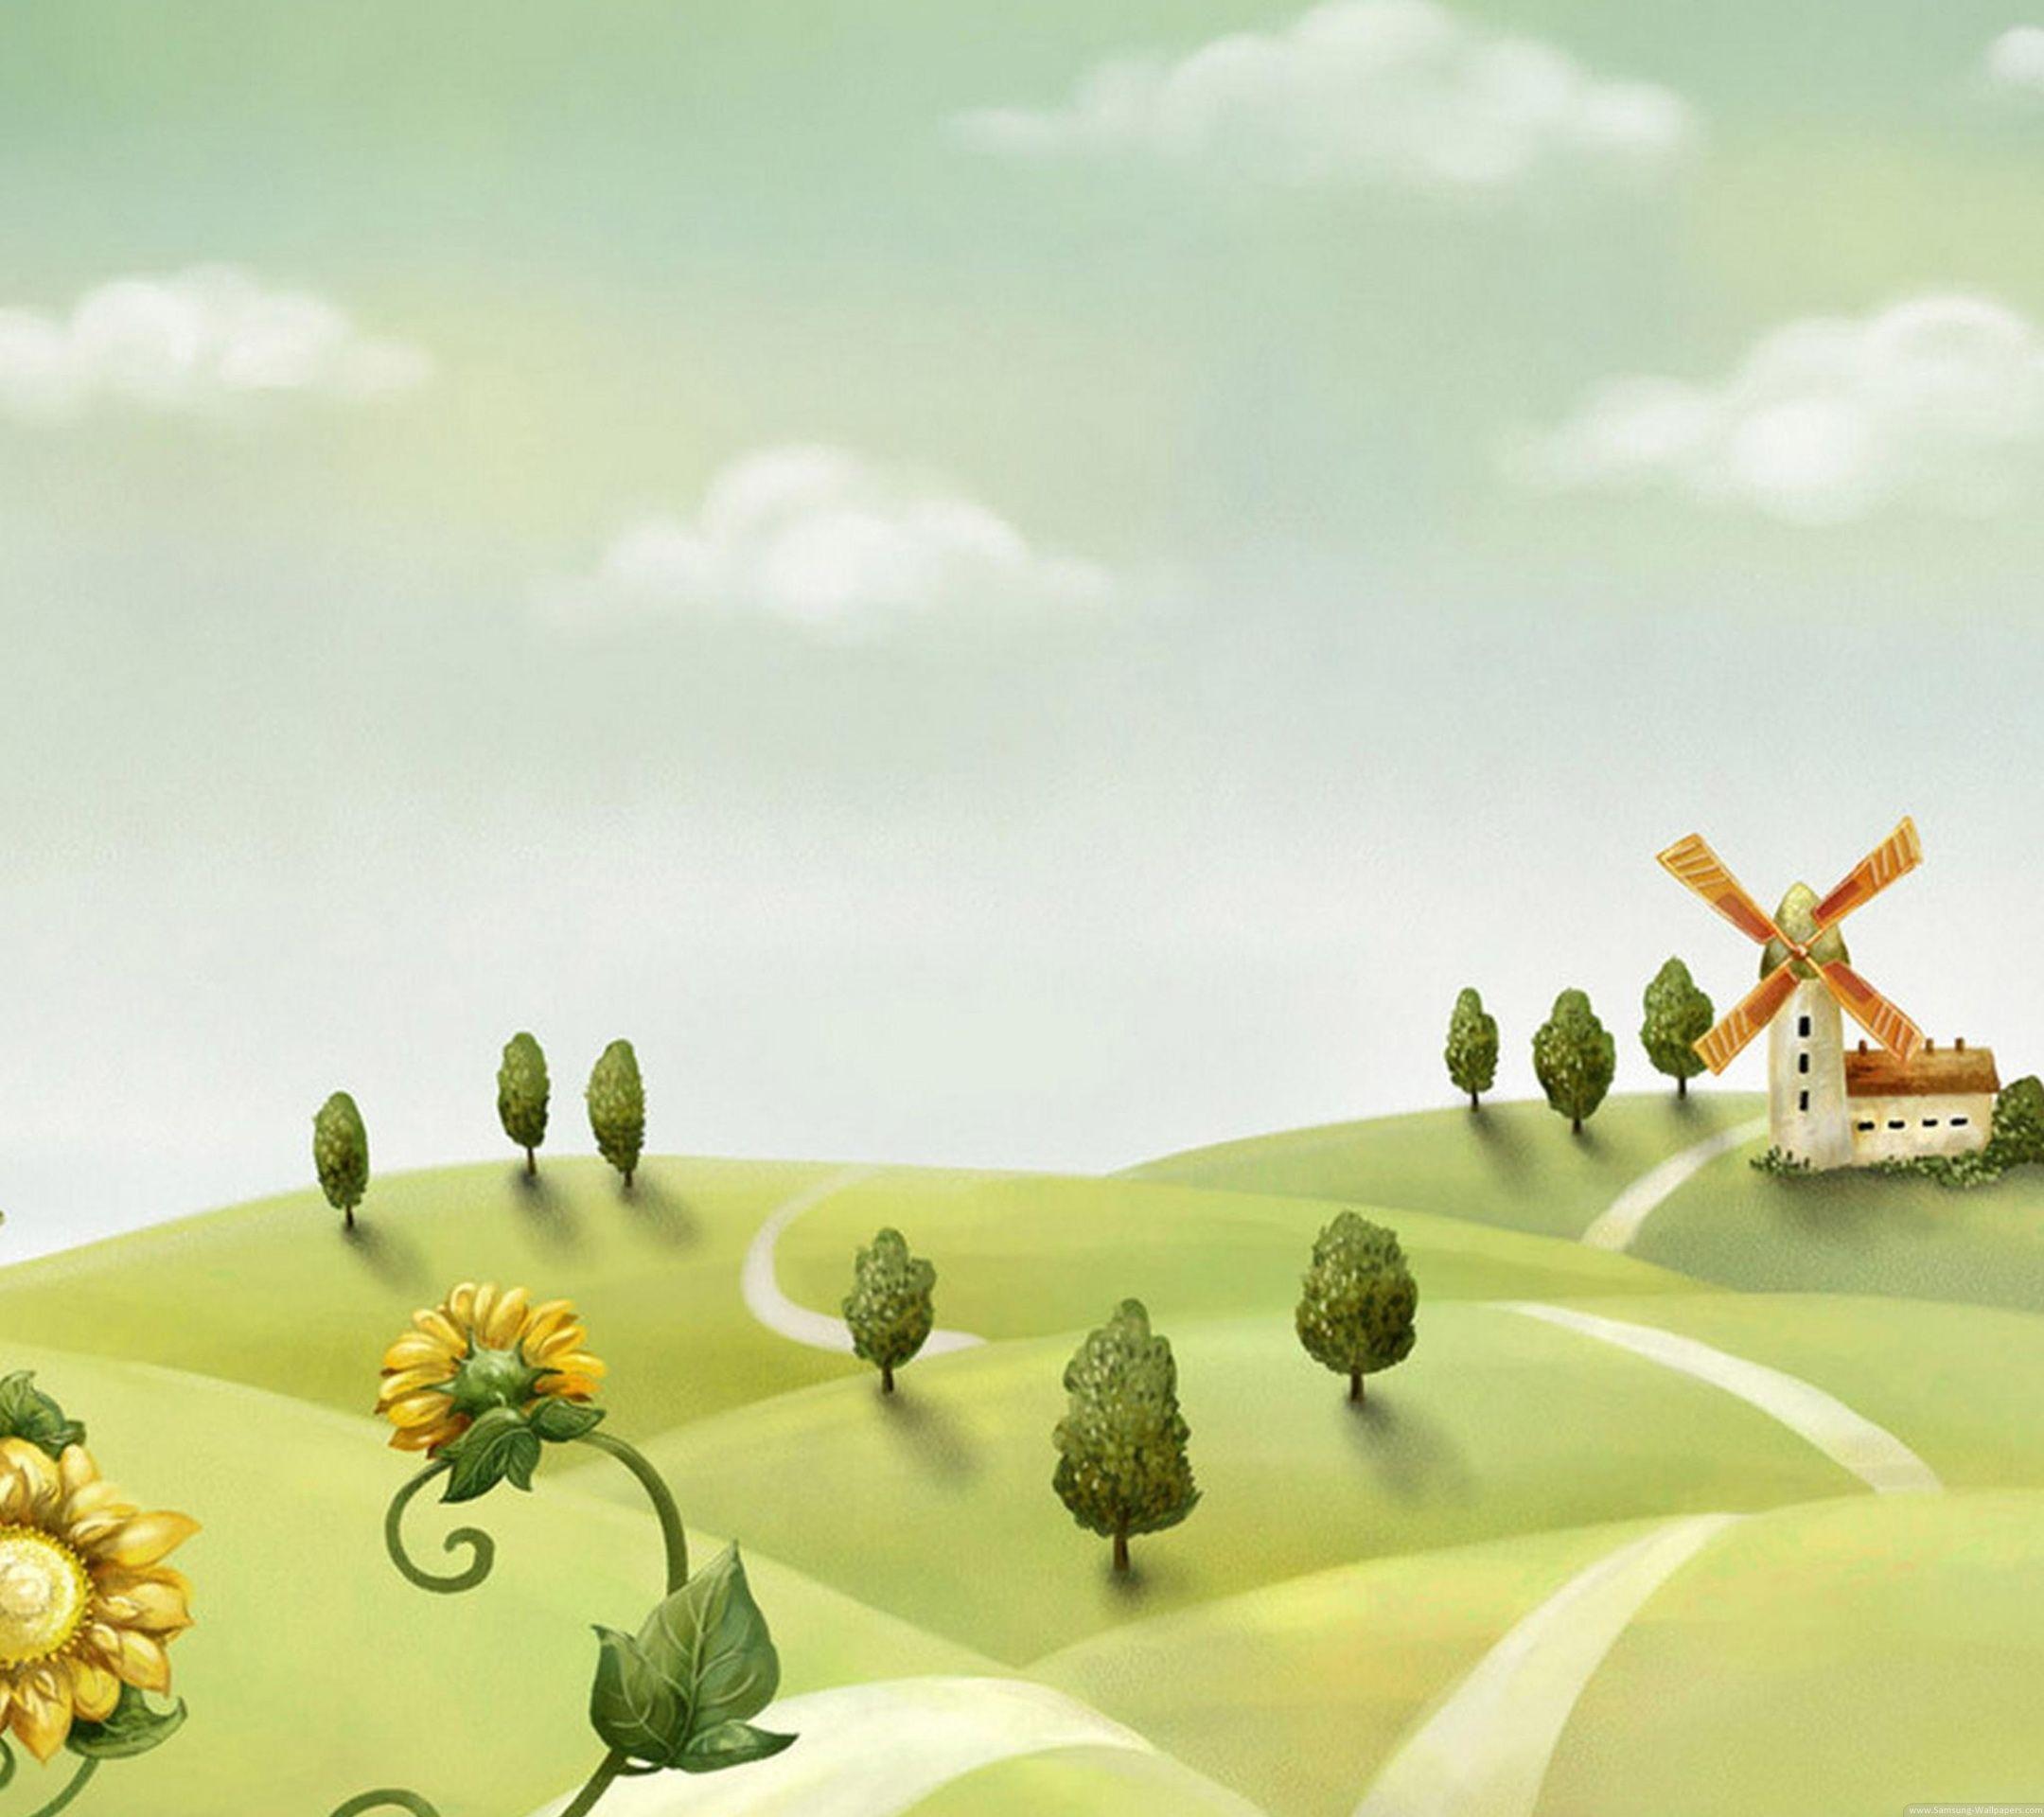 Cartoon Landscape Wallpapers - Top Free Cartoon Landscape Backgrounds ...